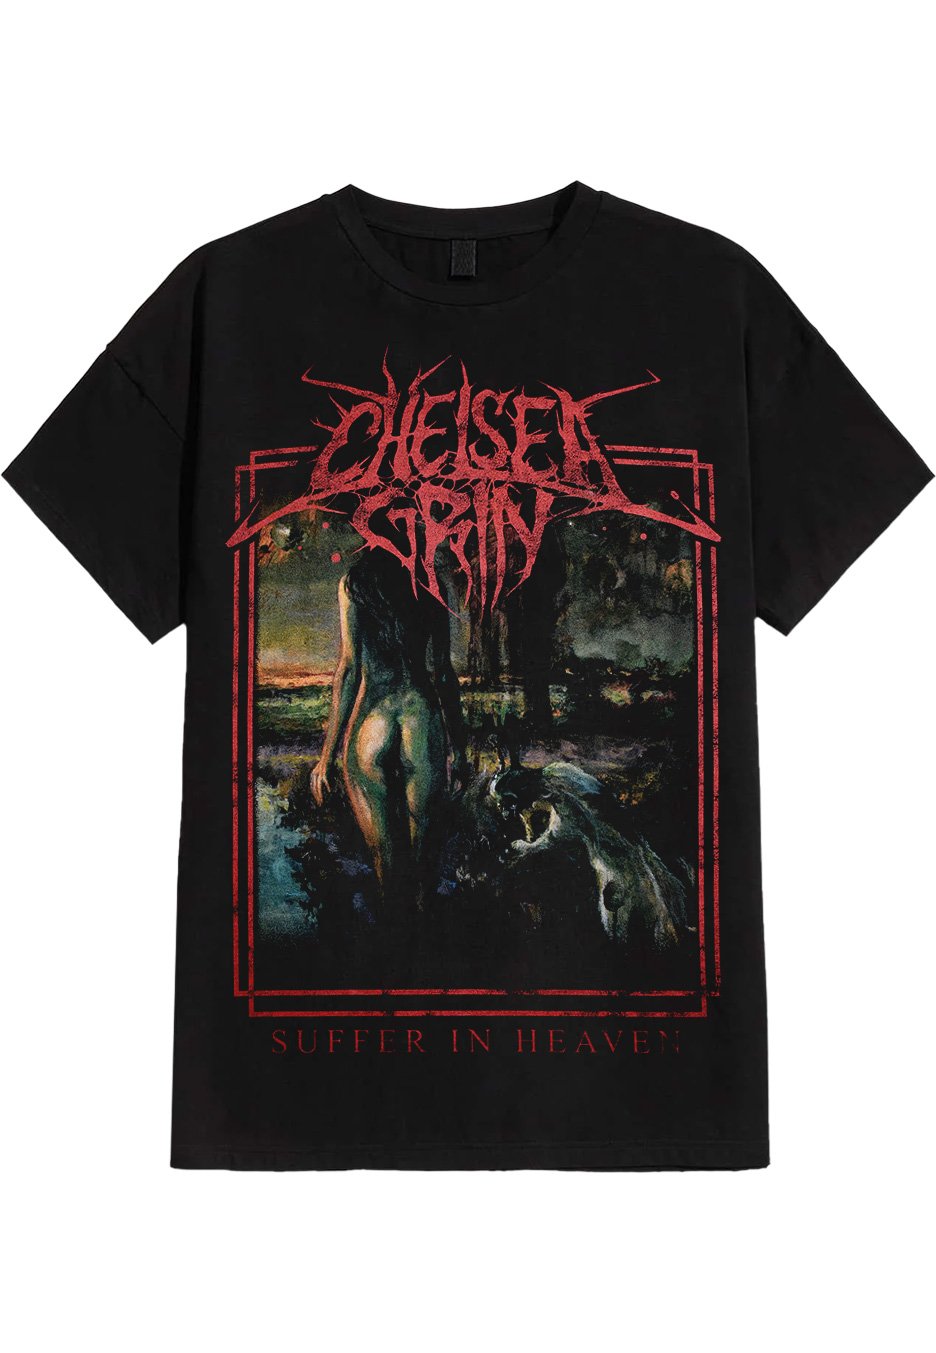 Chelsea Grin - Heaven - T-Shirt | Neutral-Image